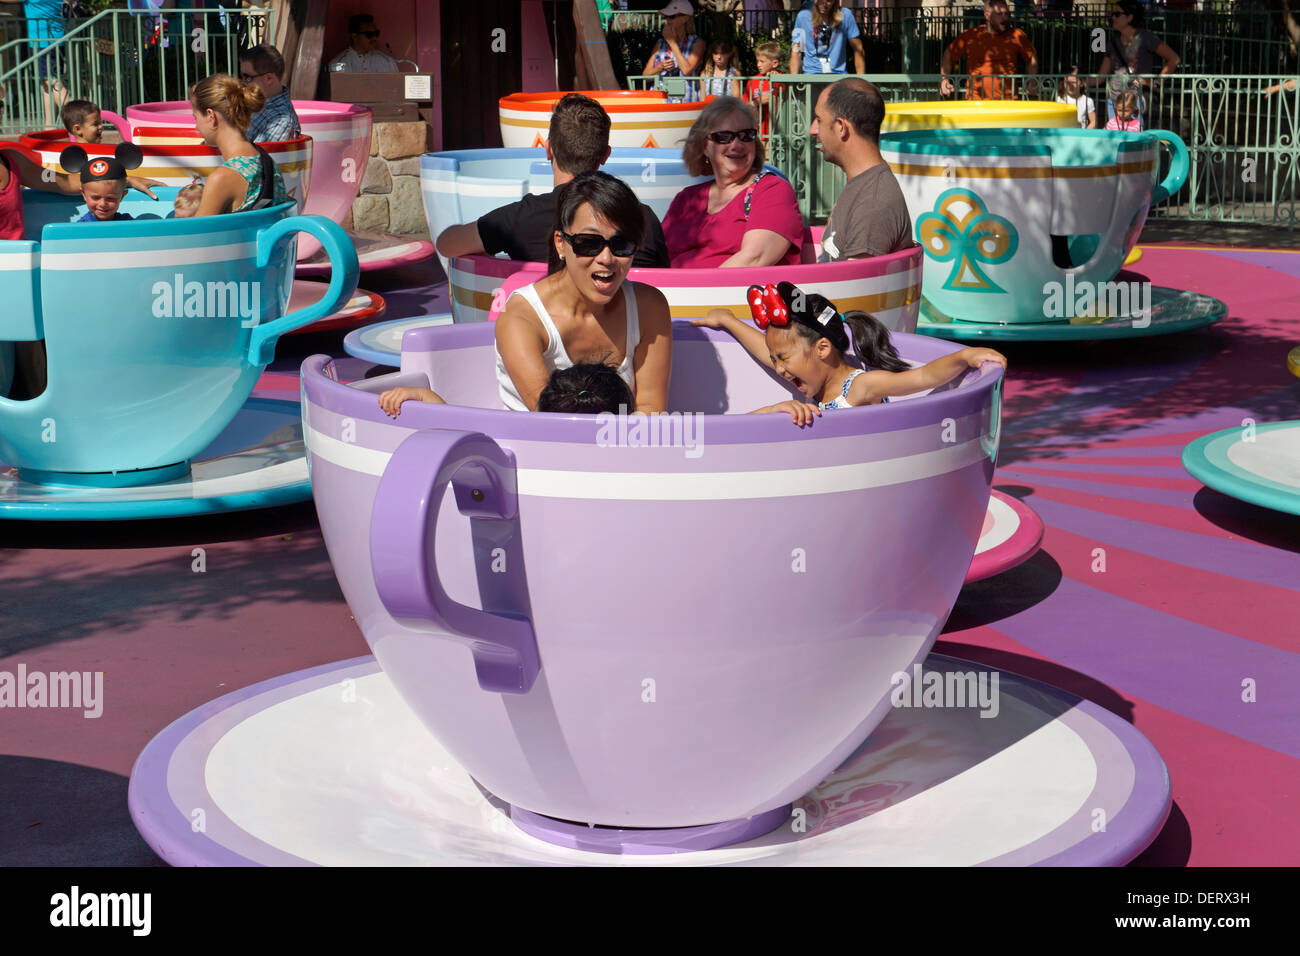 Disneyland, Mad Tea Party, Teacup Rides, Alice in Wonderland, Anaheim California Stock Photo